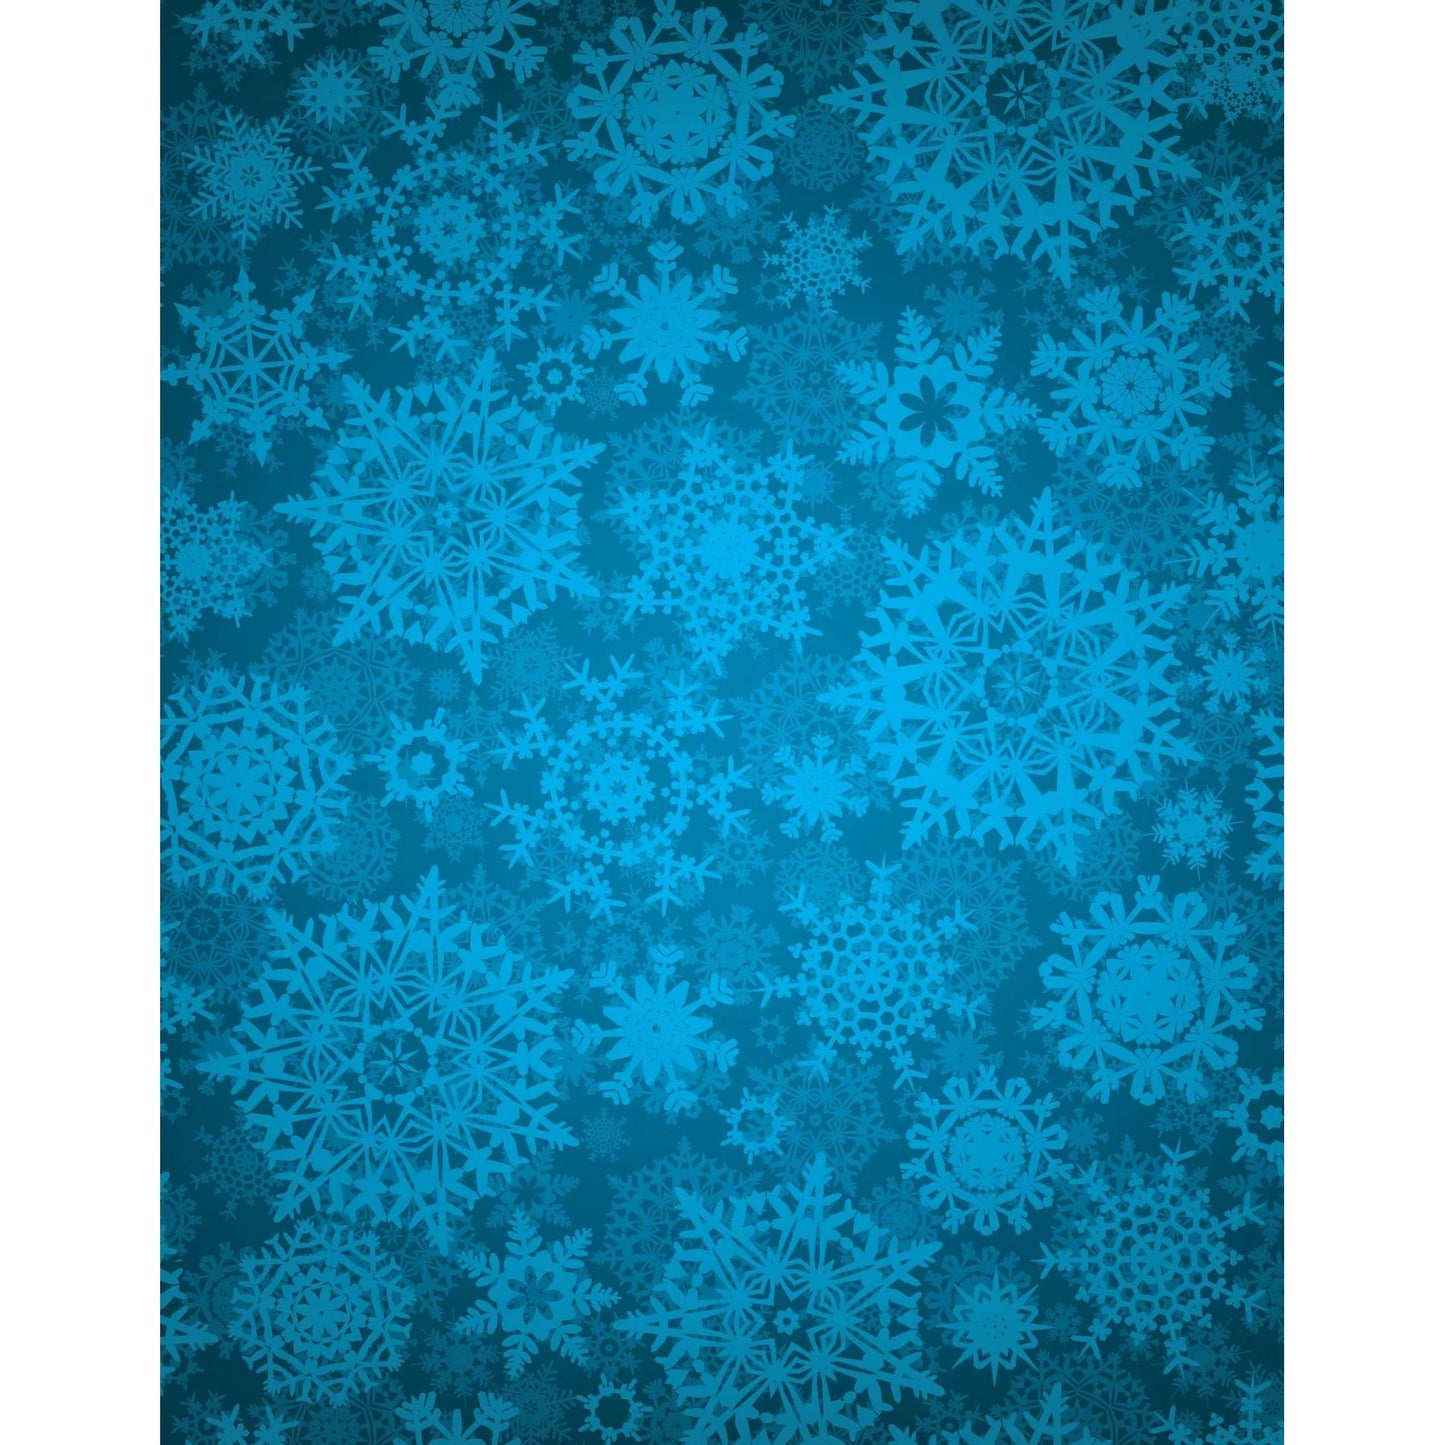 Skies of Snowflakes Fabulous Foiling Toner Cardstock  - Picket Fence Studios